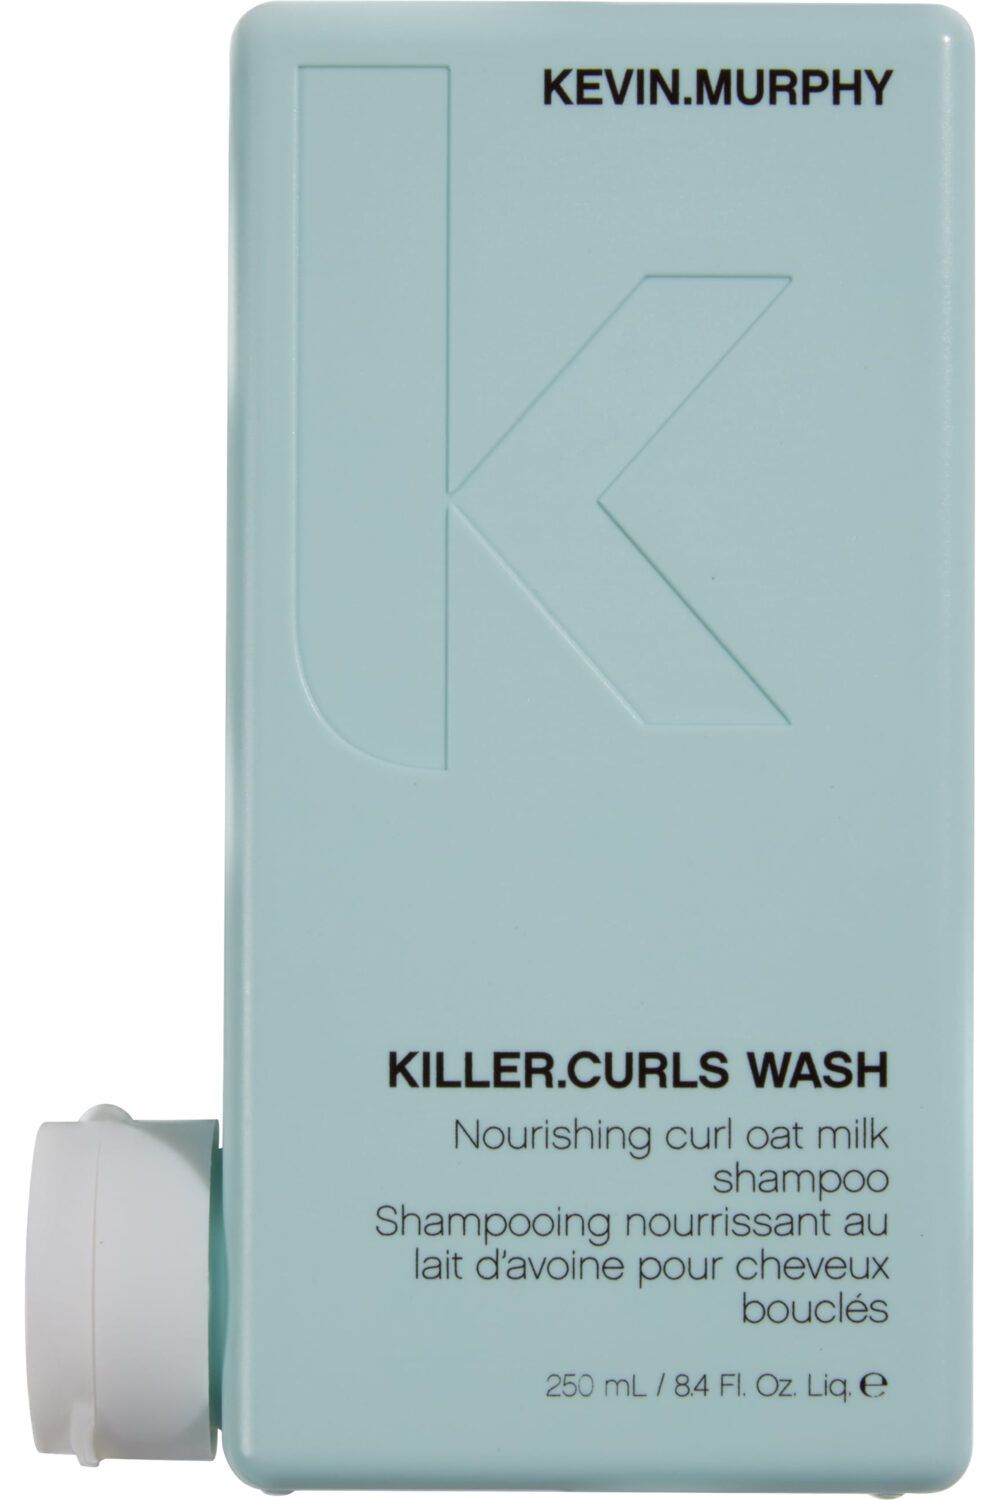 KEVIN.MURPHY - Shampoing cheveux bouclés KILLER.CURLS WASH